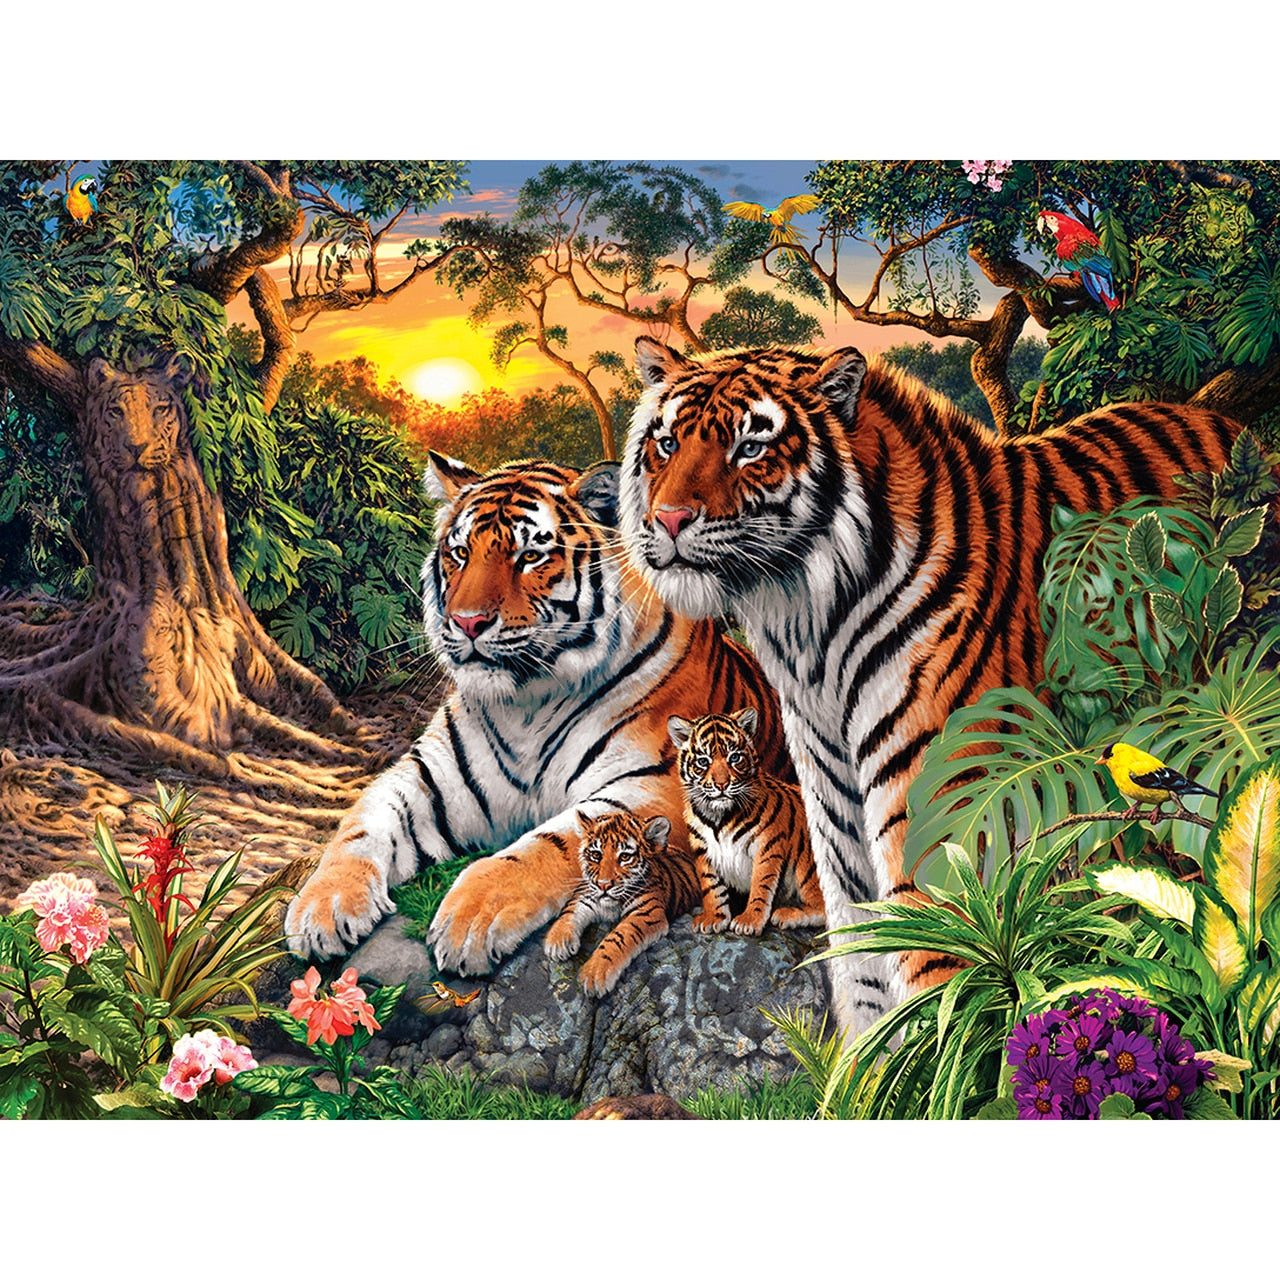 Jungle Pride 500 Piece Glow In The Dark Hidden Images Puzzle    